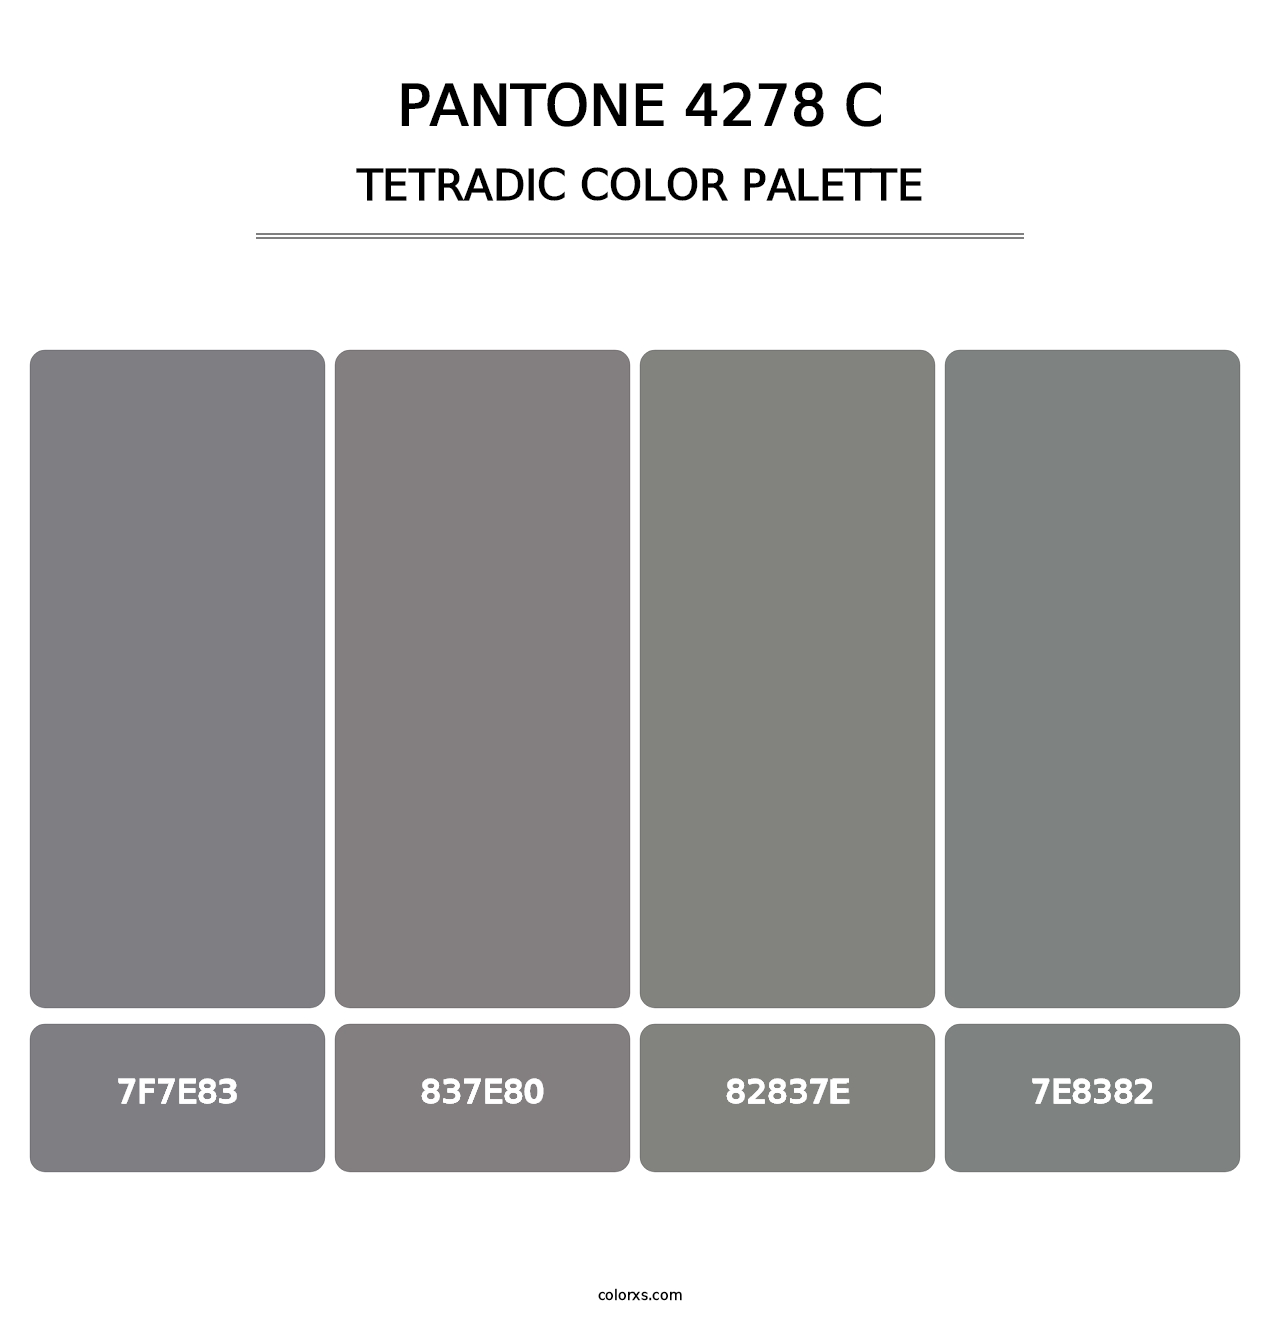 PANTONE 4278 C - Tetradic Color Palette